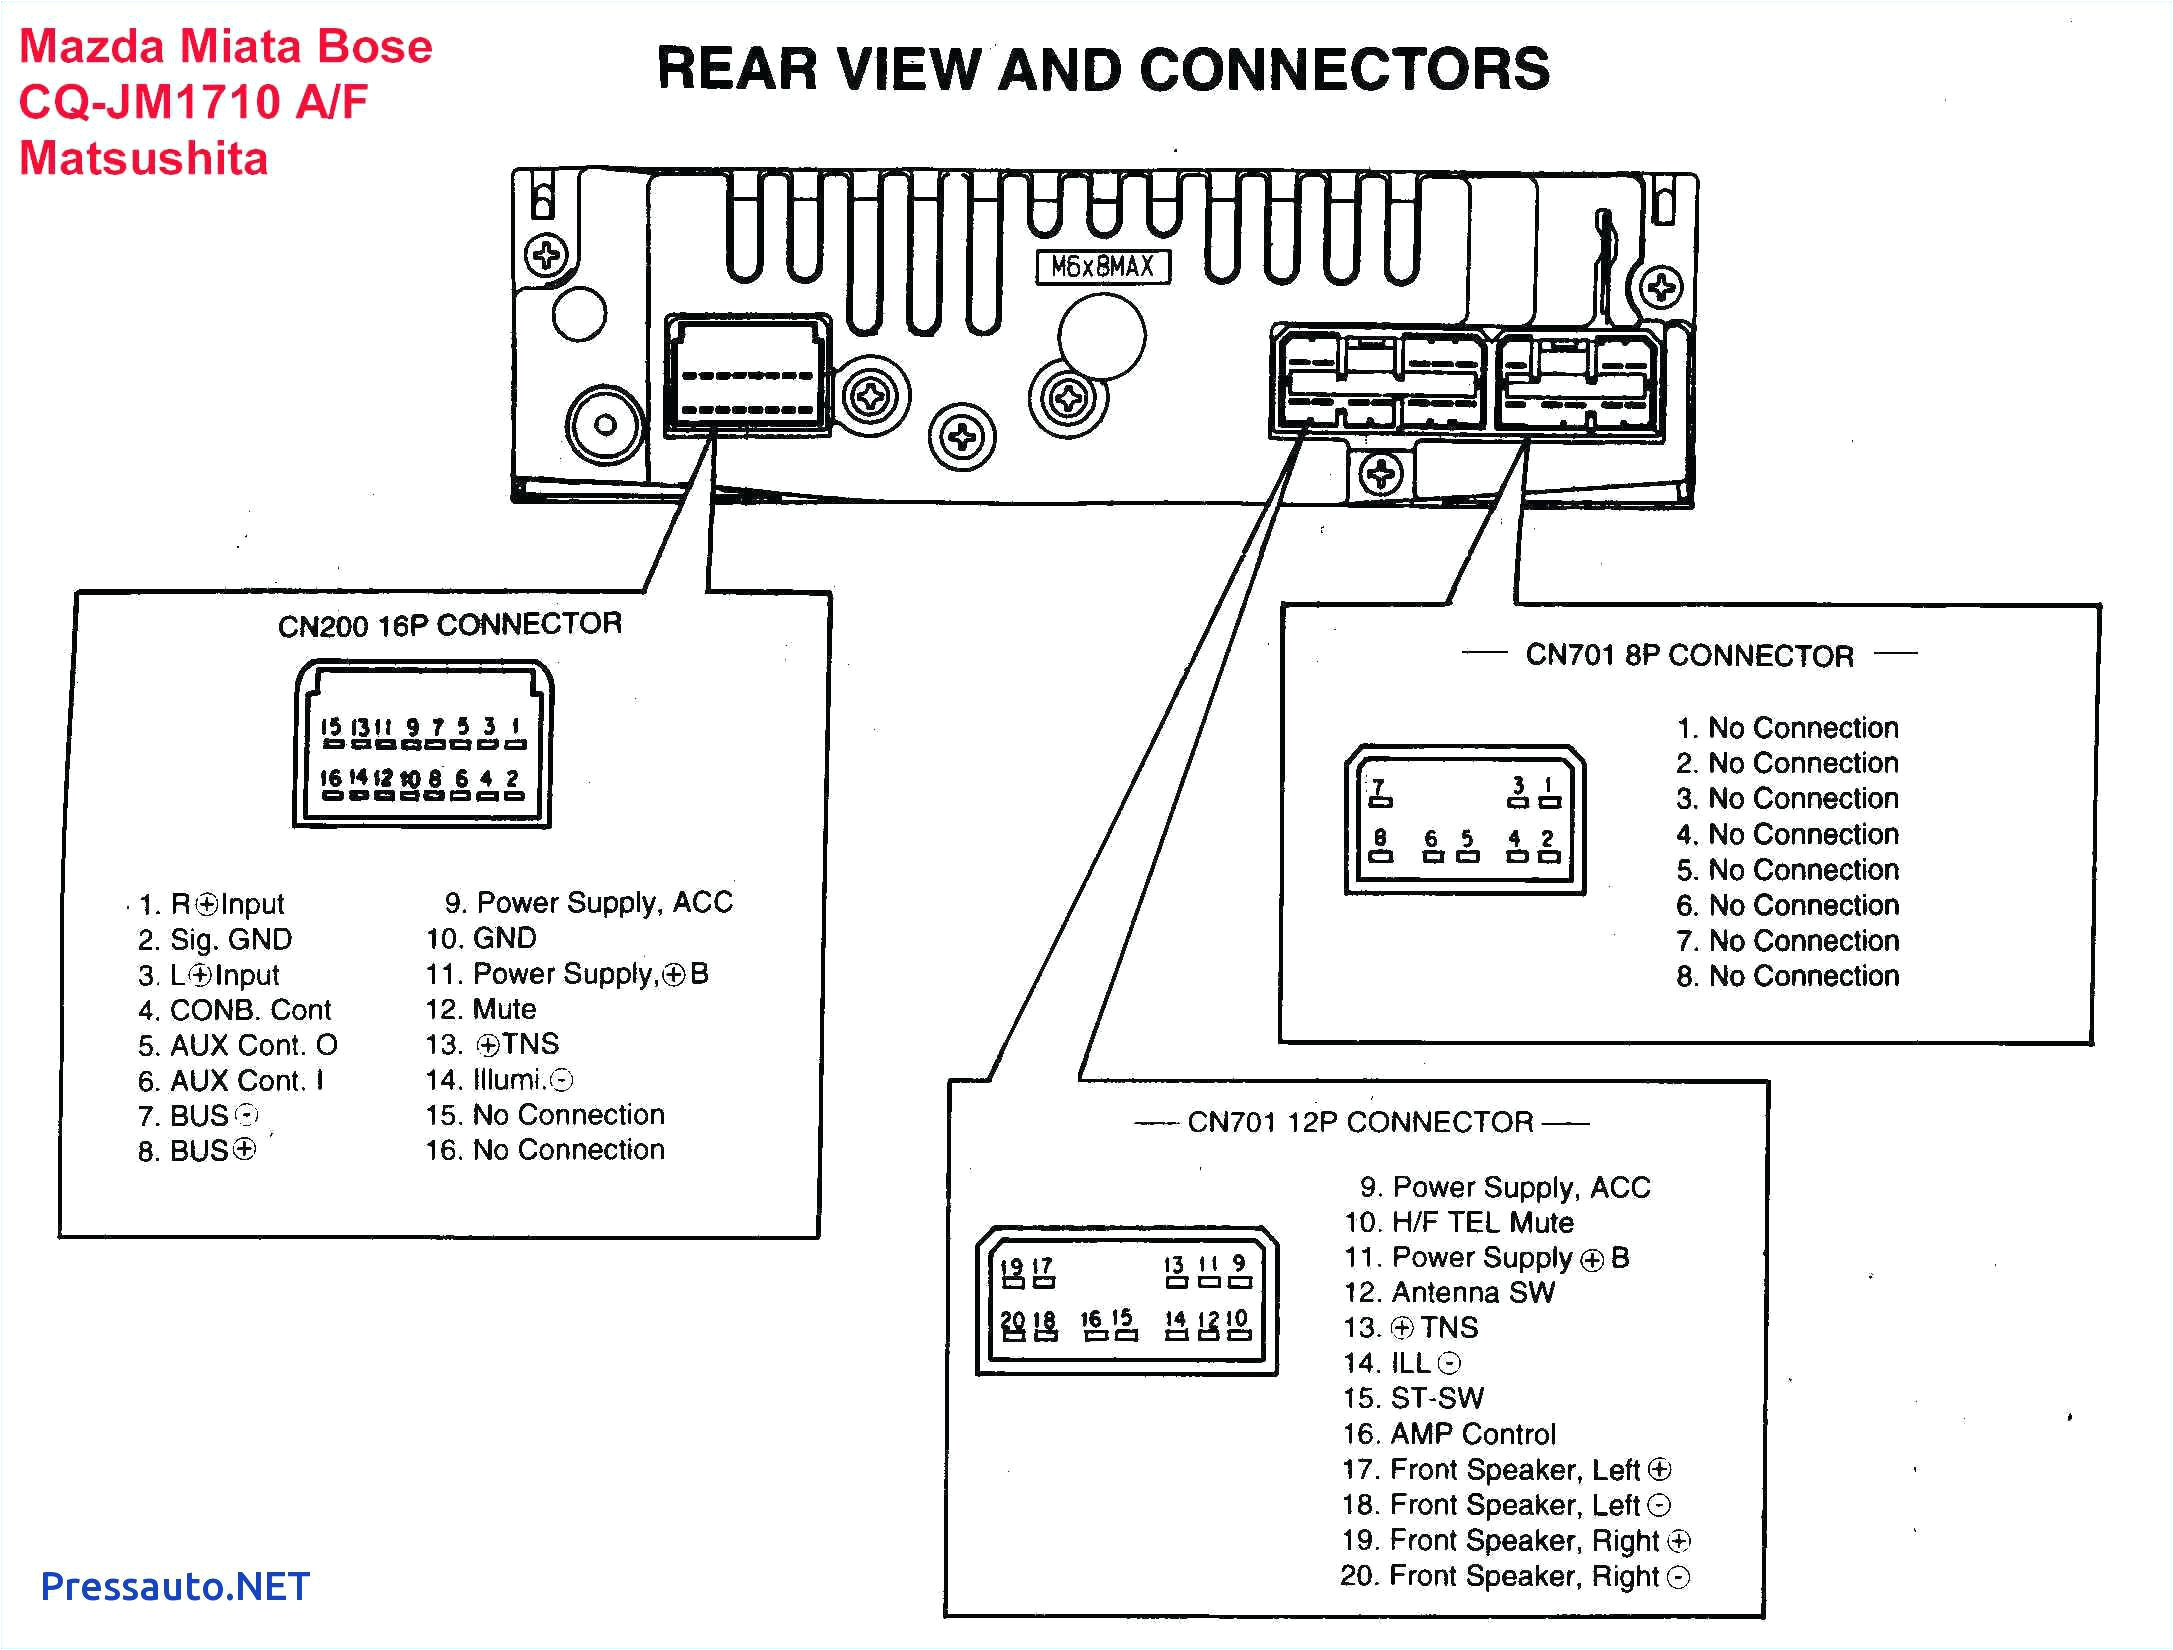 nissan nav radio wiring wiring diagram expert nissan navara radio wire nissan nav radio wiring